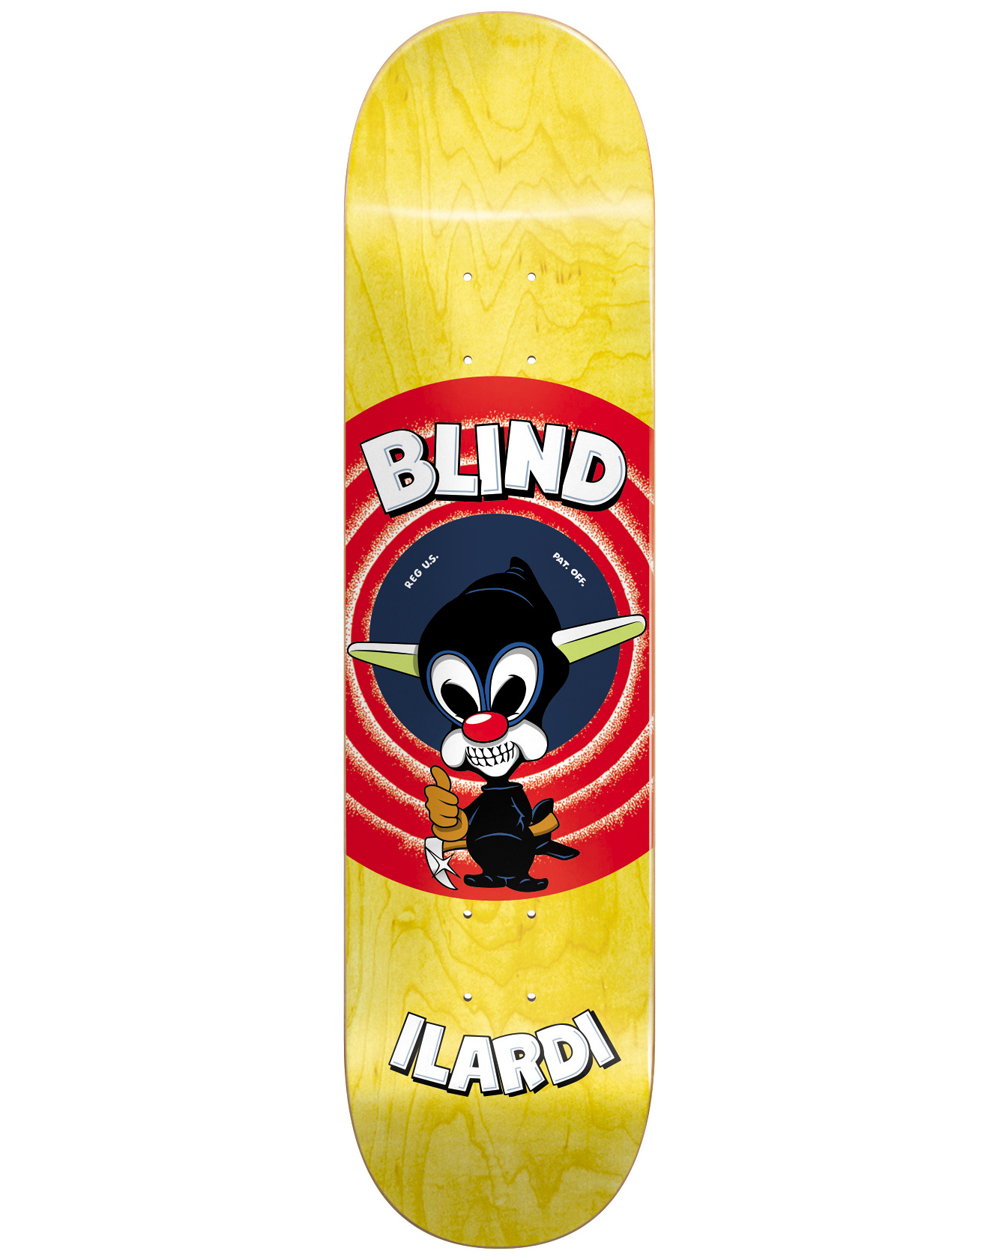 Blind Tabla Skateboard Ilardi Reaper Impersonator 8"